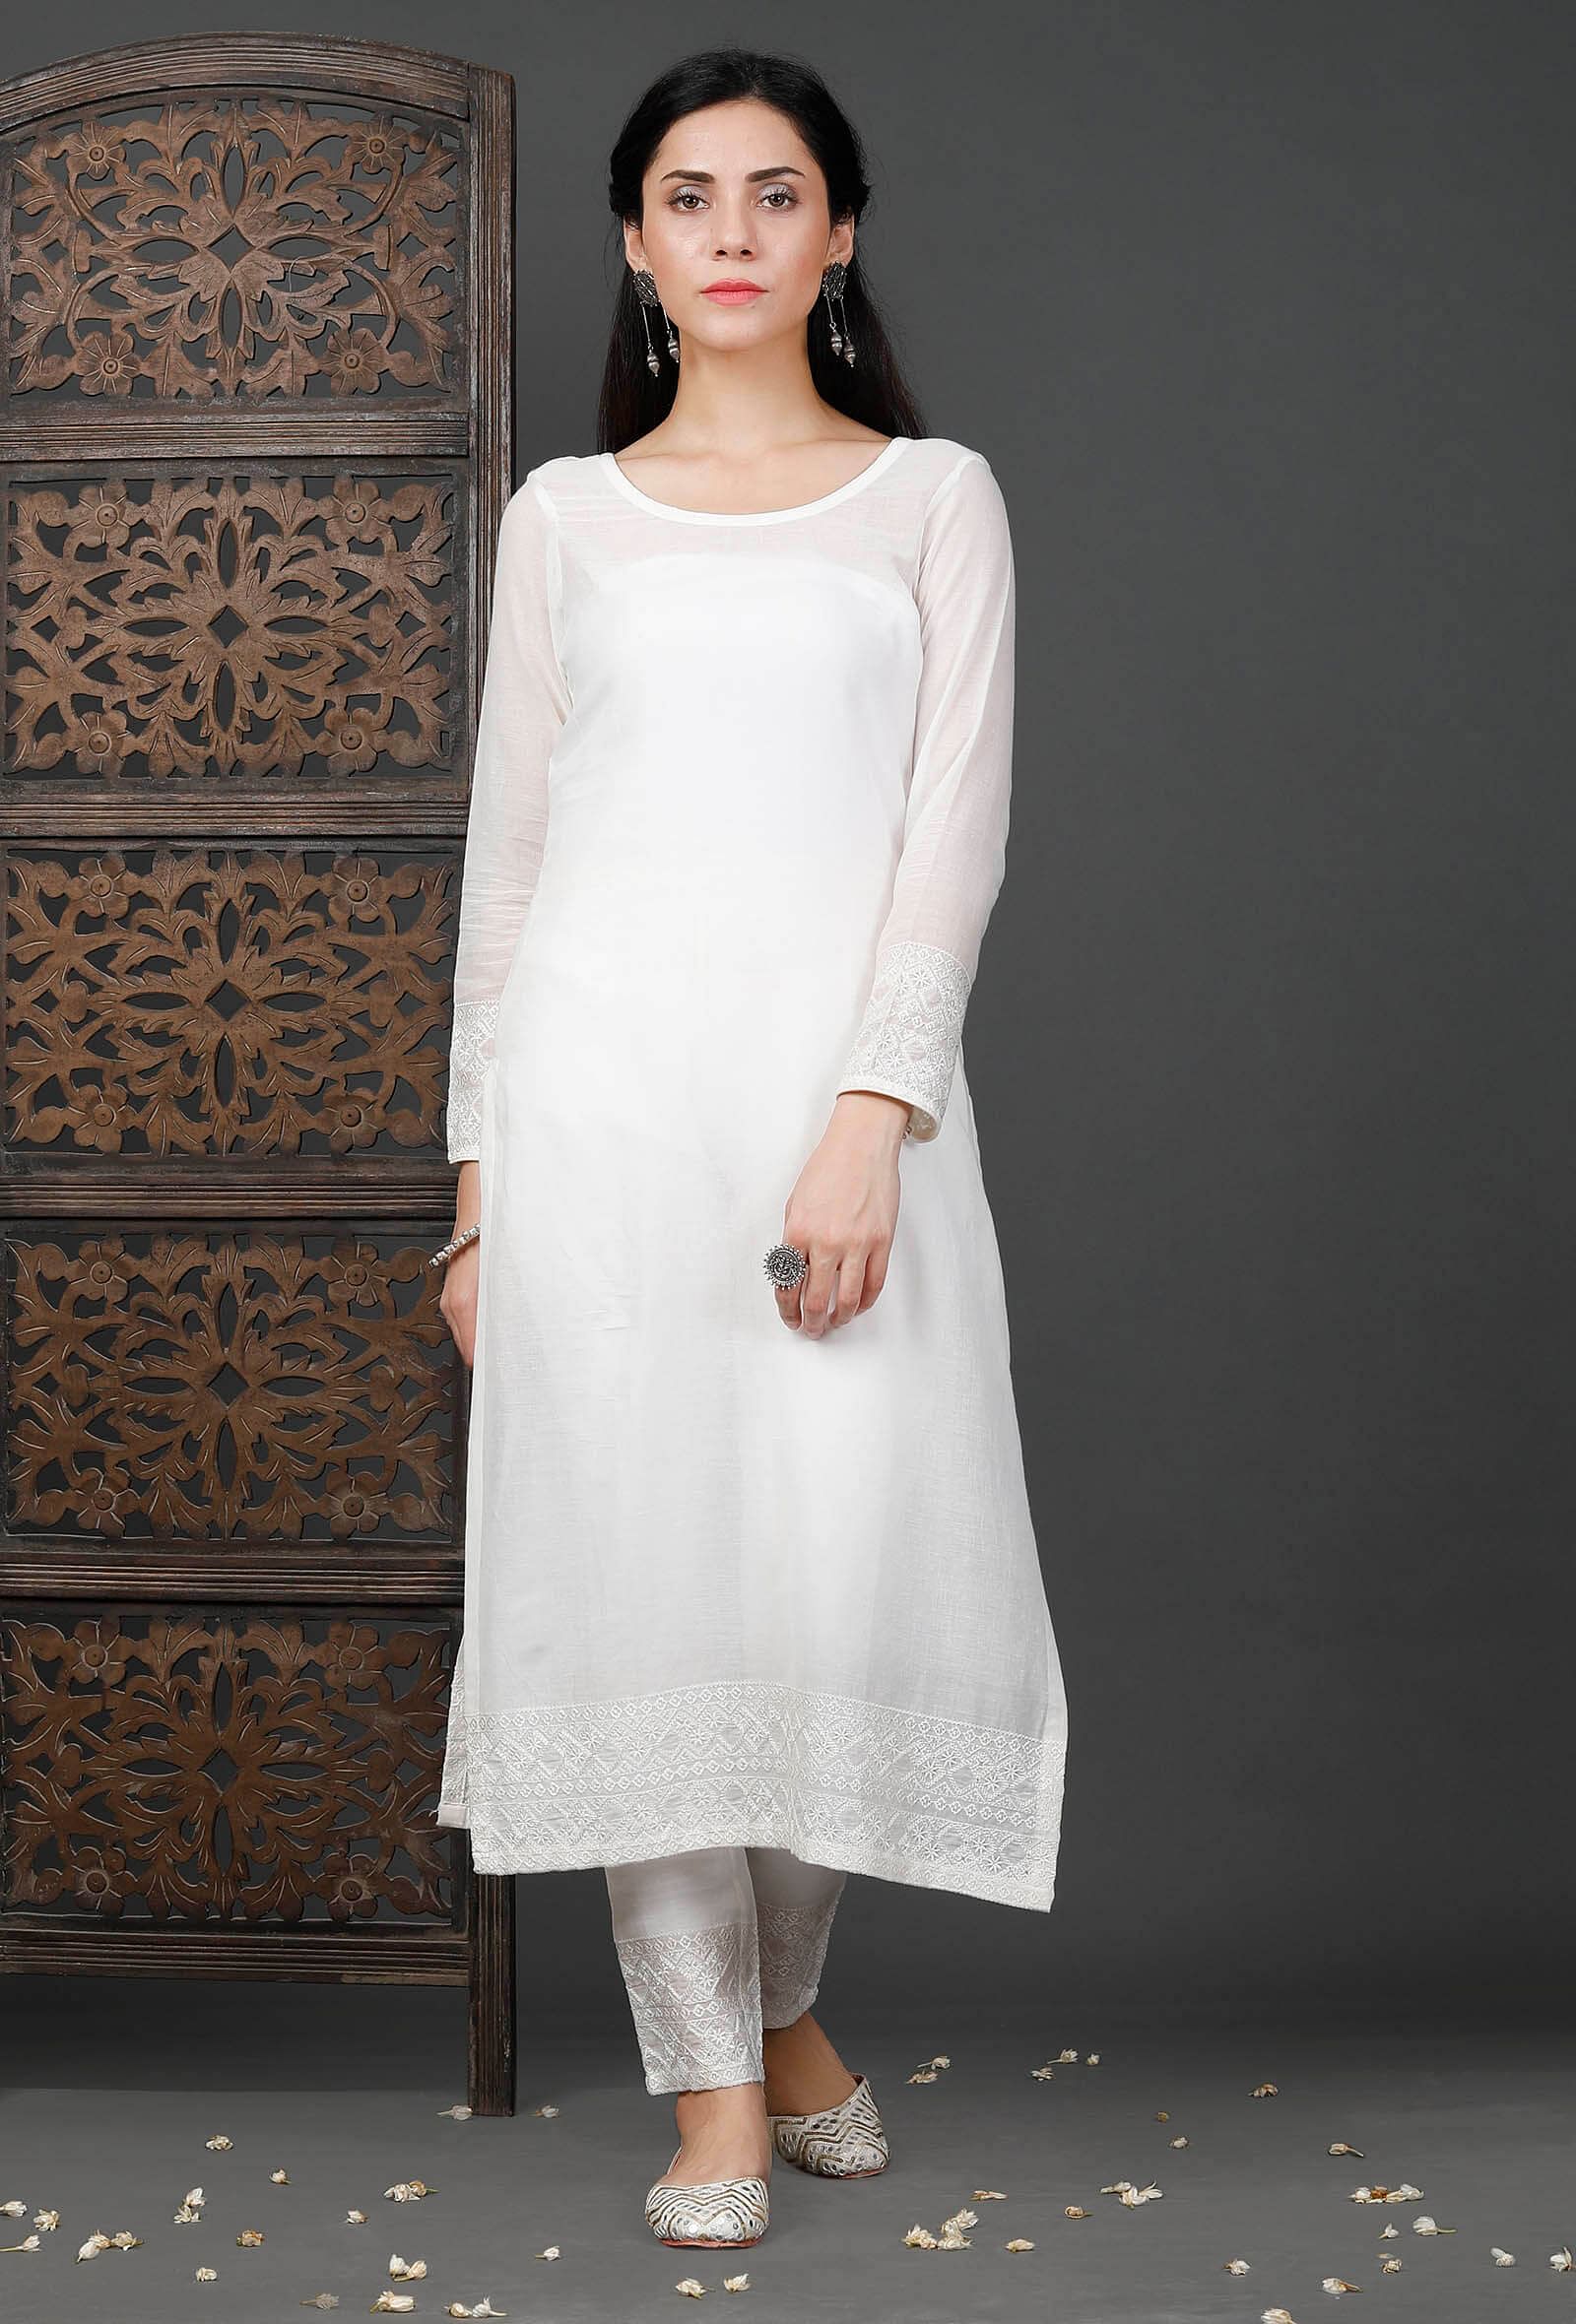 Buy Classic Elegance. The Kerala Kasavu Cotton & Zari Long Ethnic Kurta /  Dress - White & Gold. Online